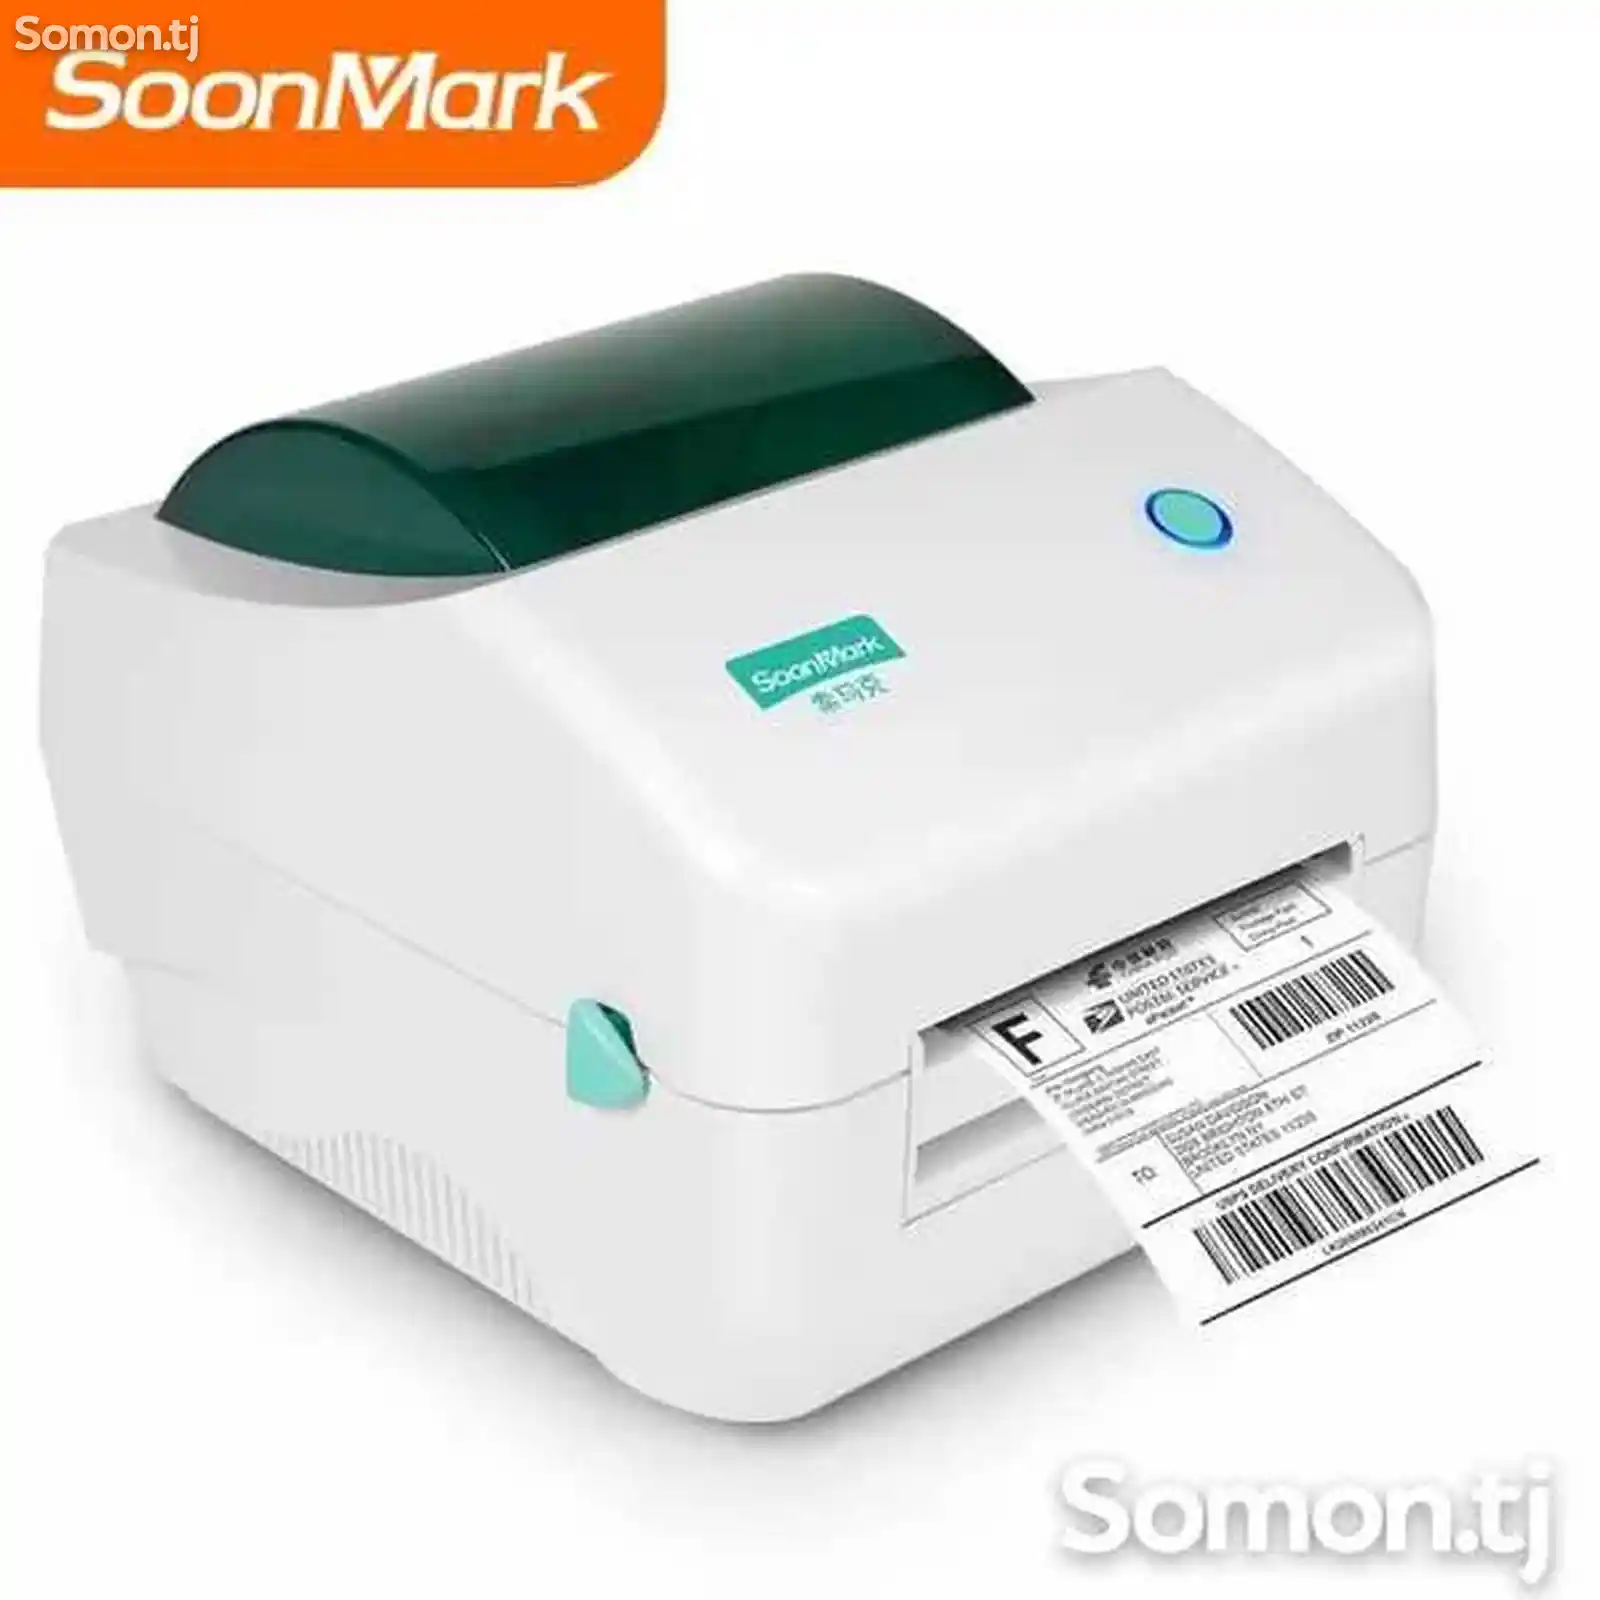 Принтер для печати этикеток М8 SoonMark-2